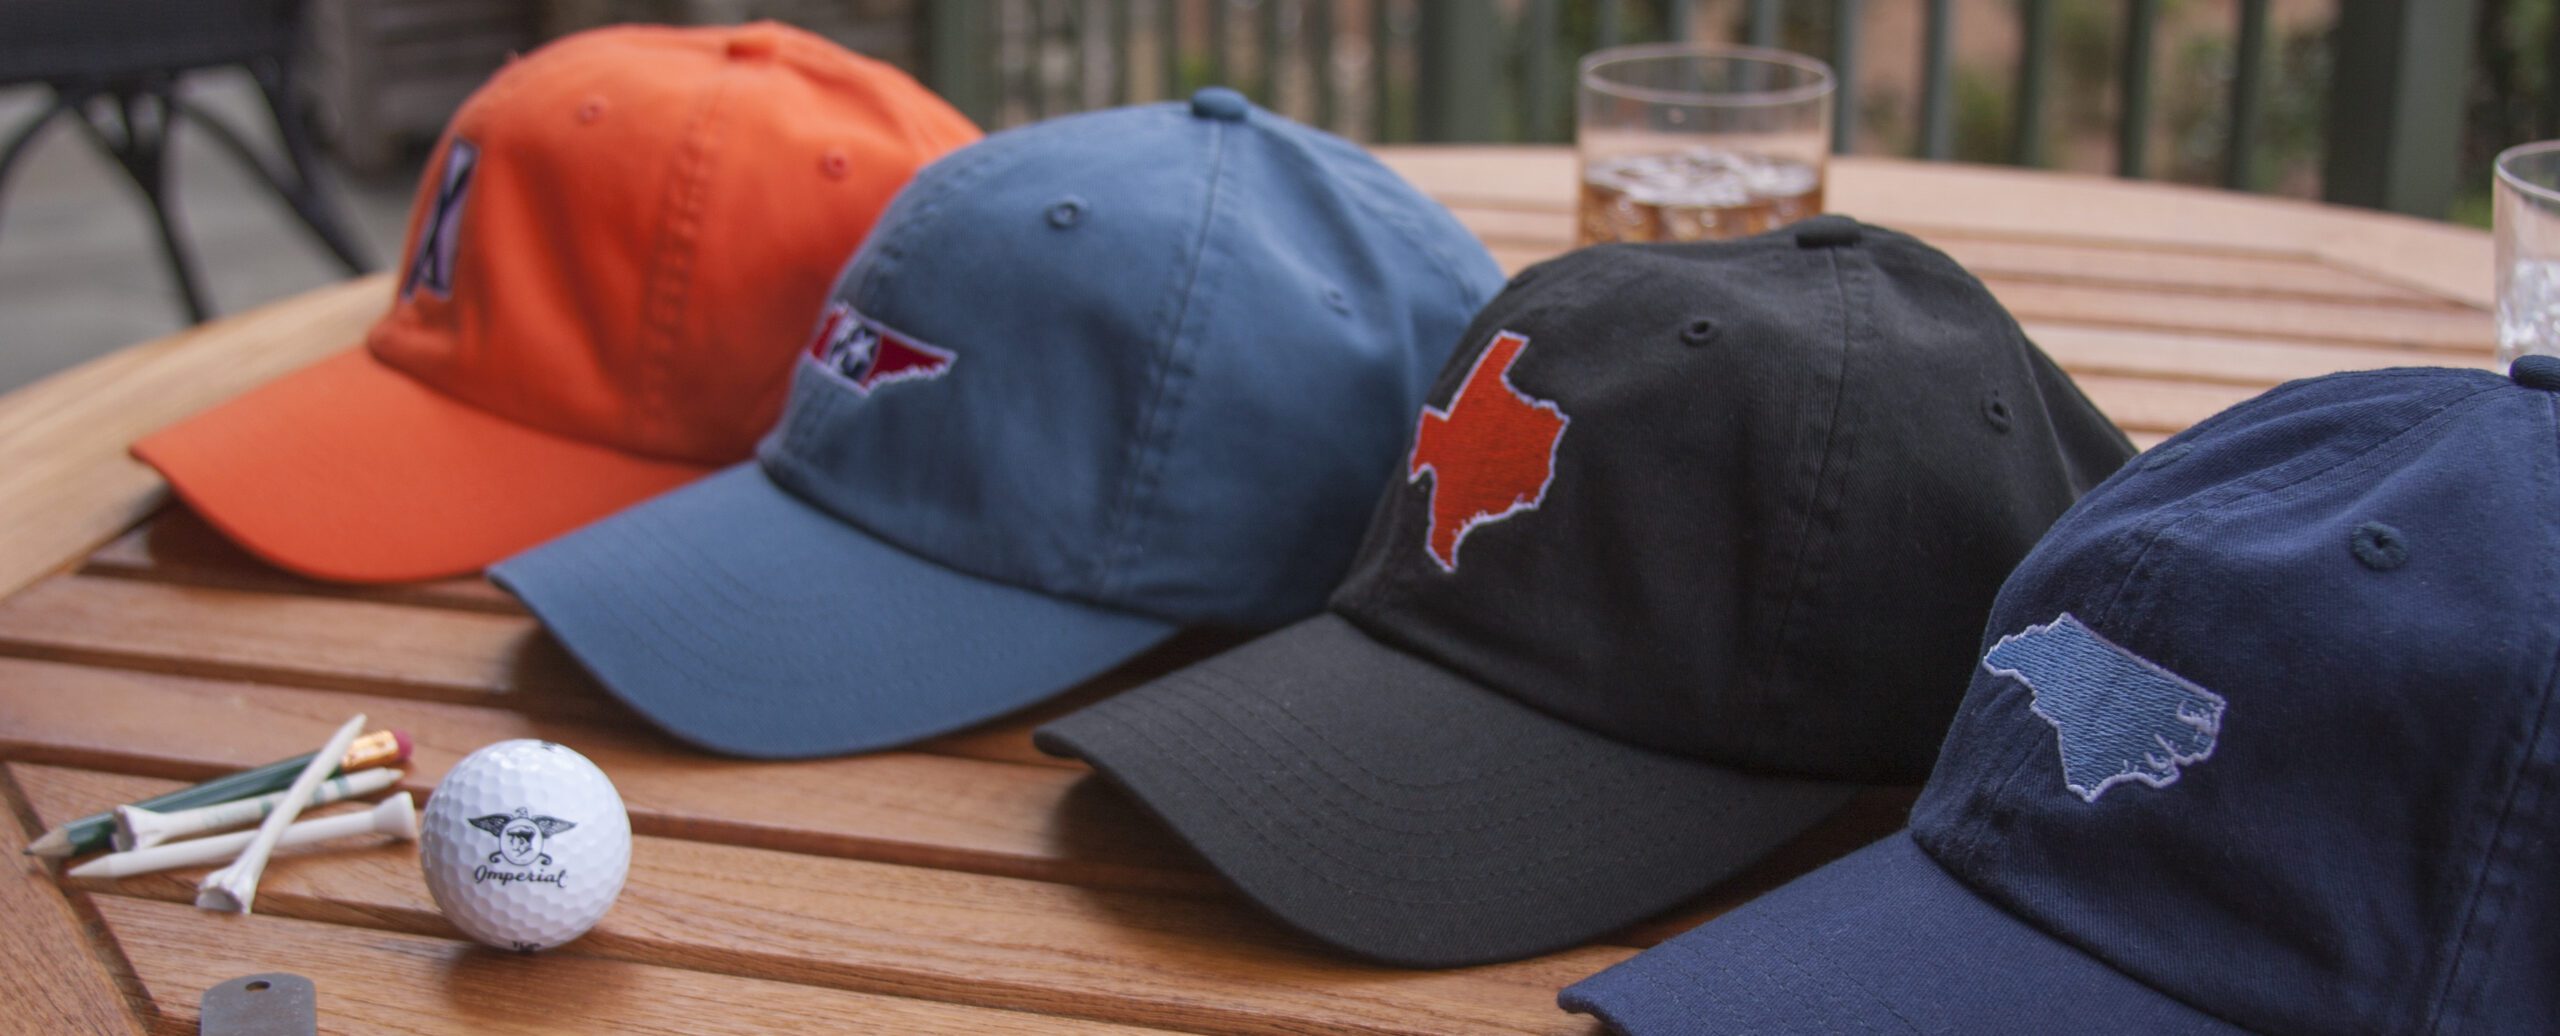 Titleist MLB Performance Licensed Hat (Chicago Cubs, Adjustable) New